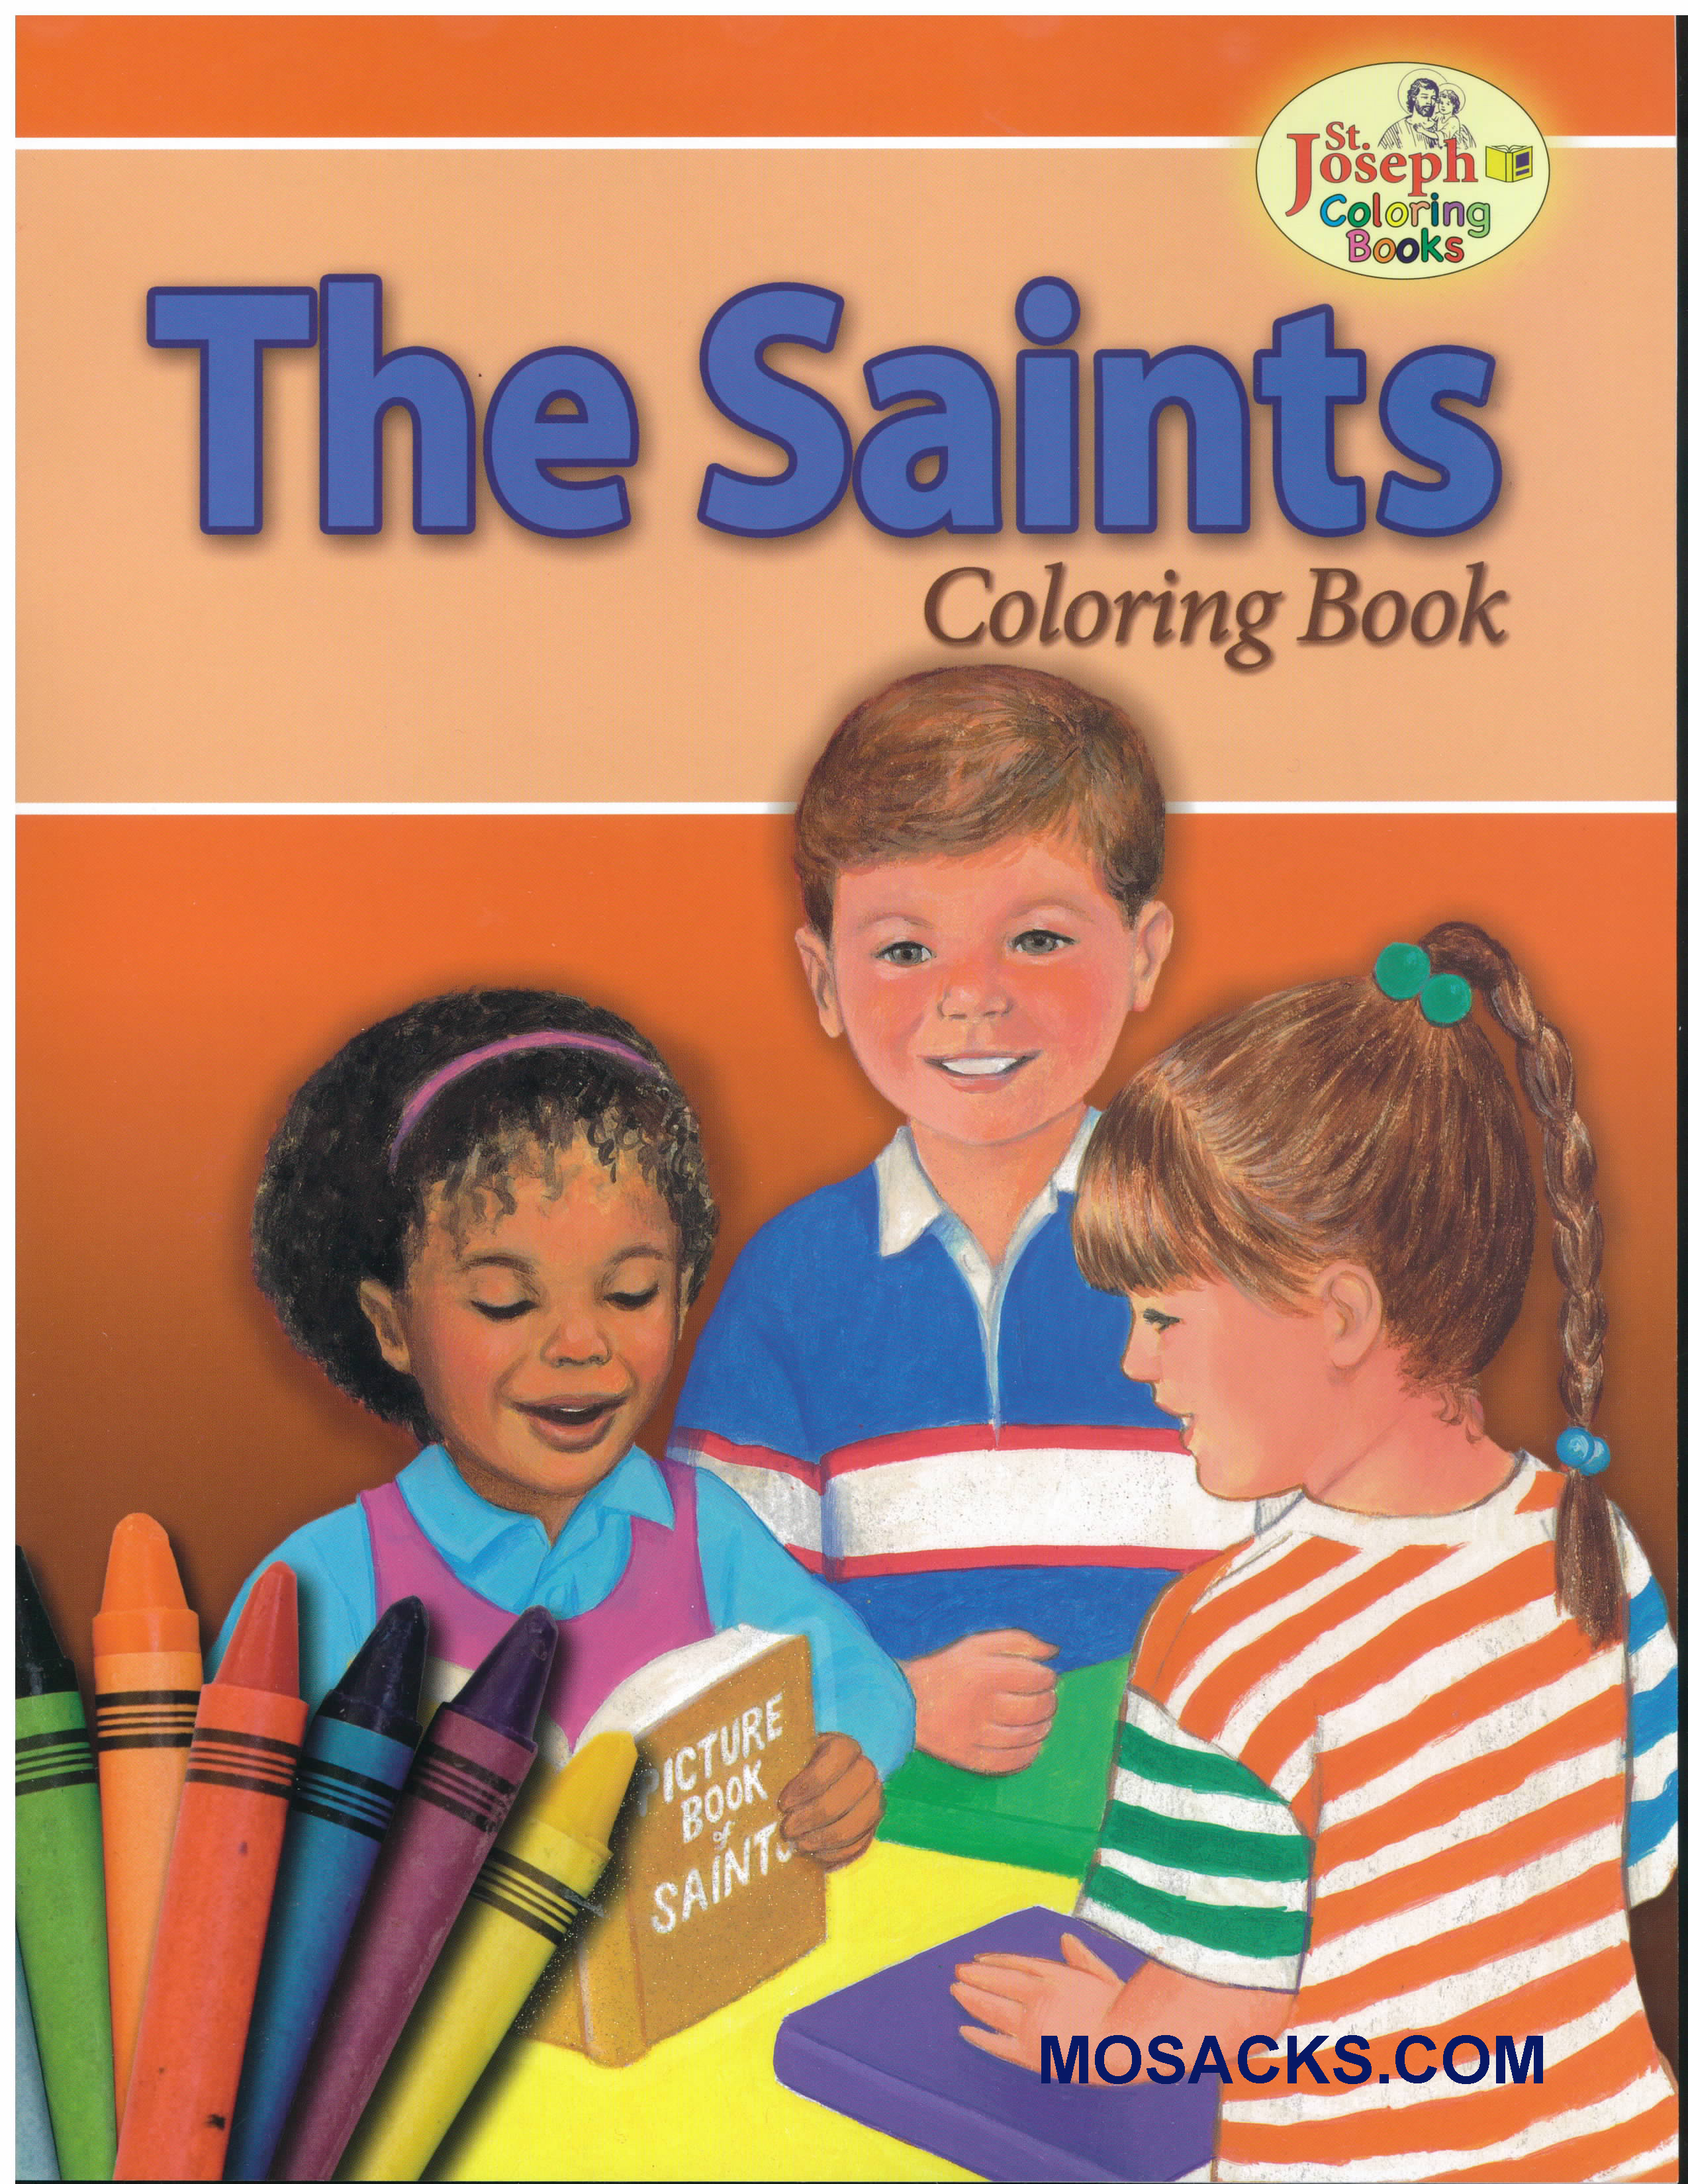 St Joseph Educational Coloring Book The Saints-978089942681-5